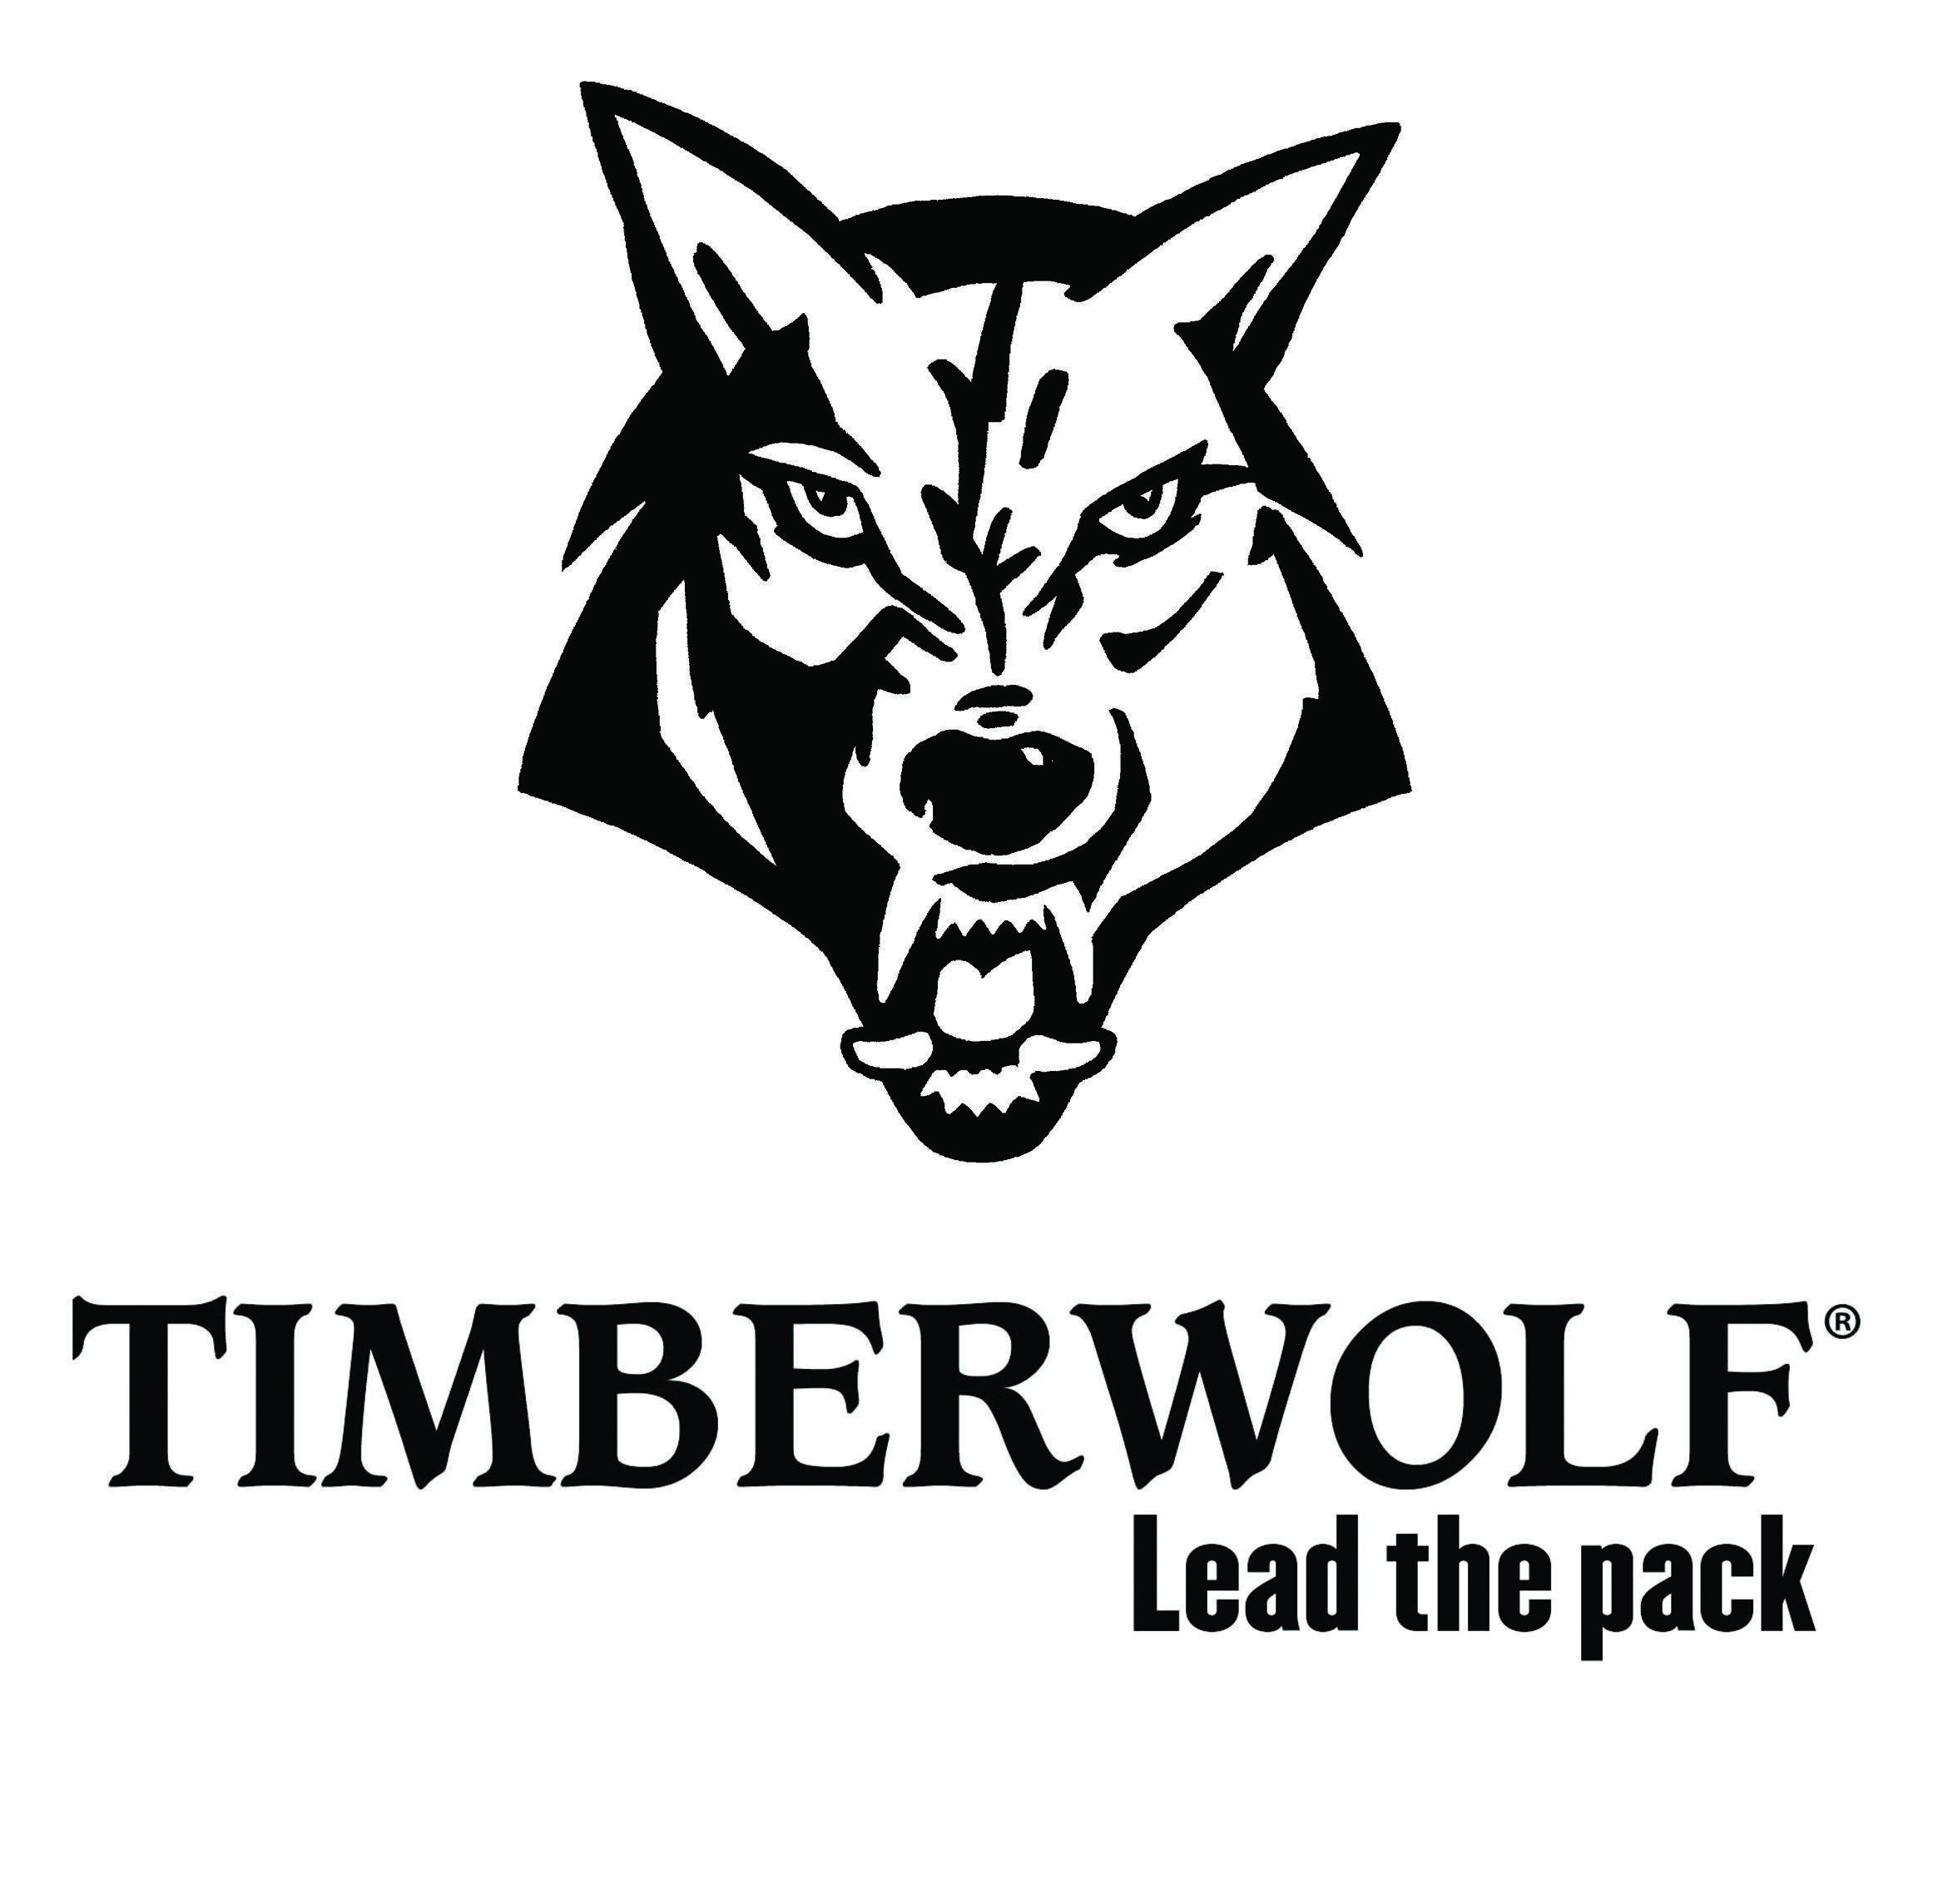 Timberwolf Logo - Timberwolf Professional Wood Chippers & Wood Shredders | Timberwolf